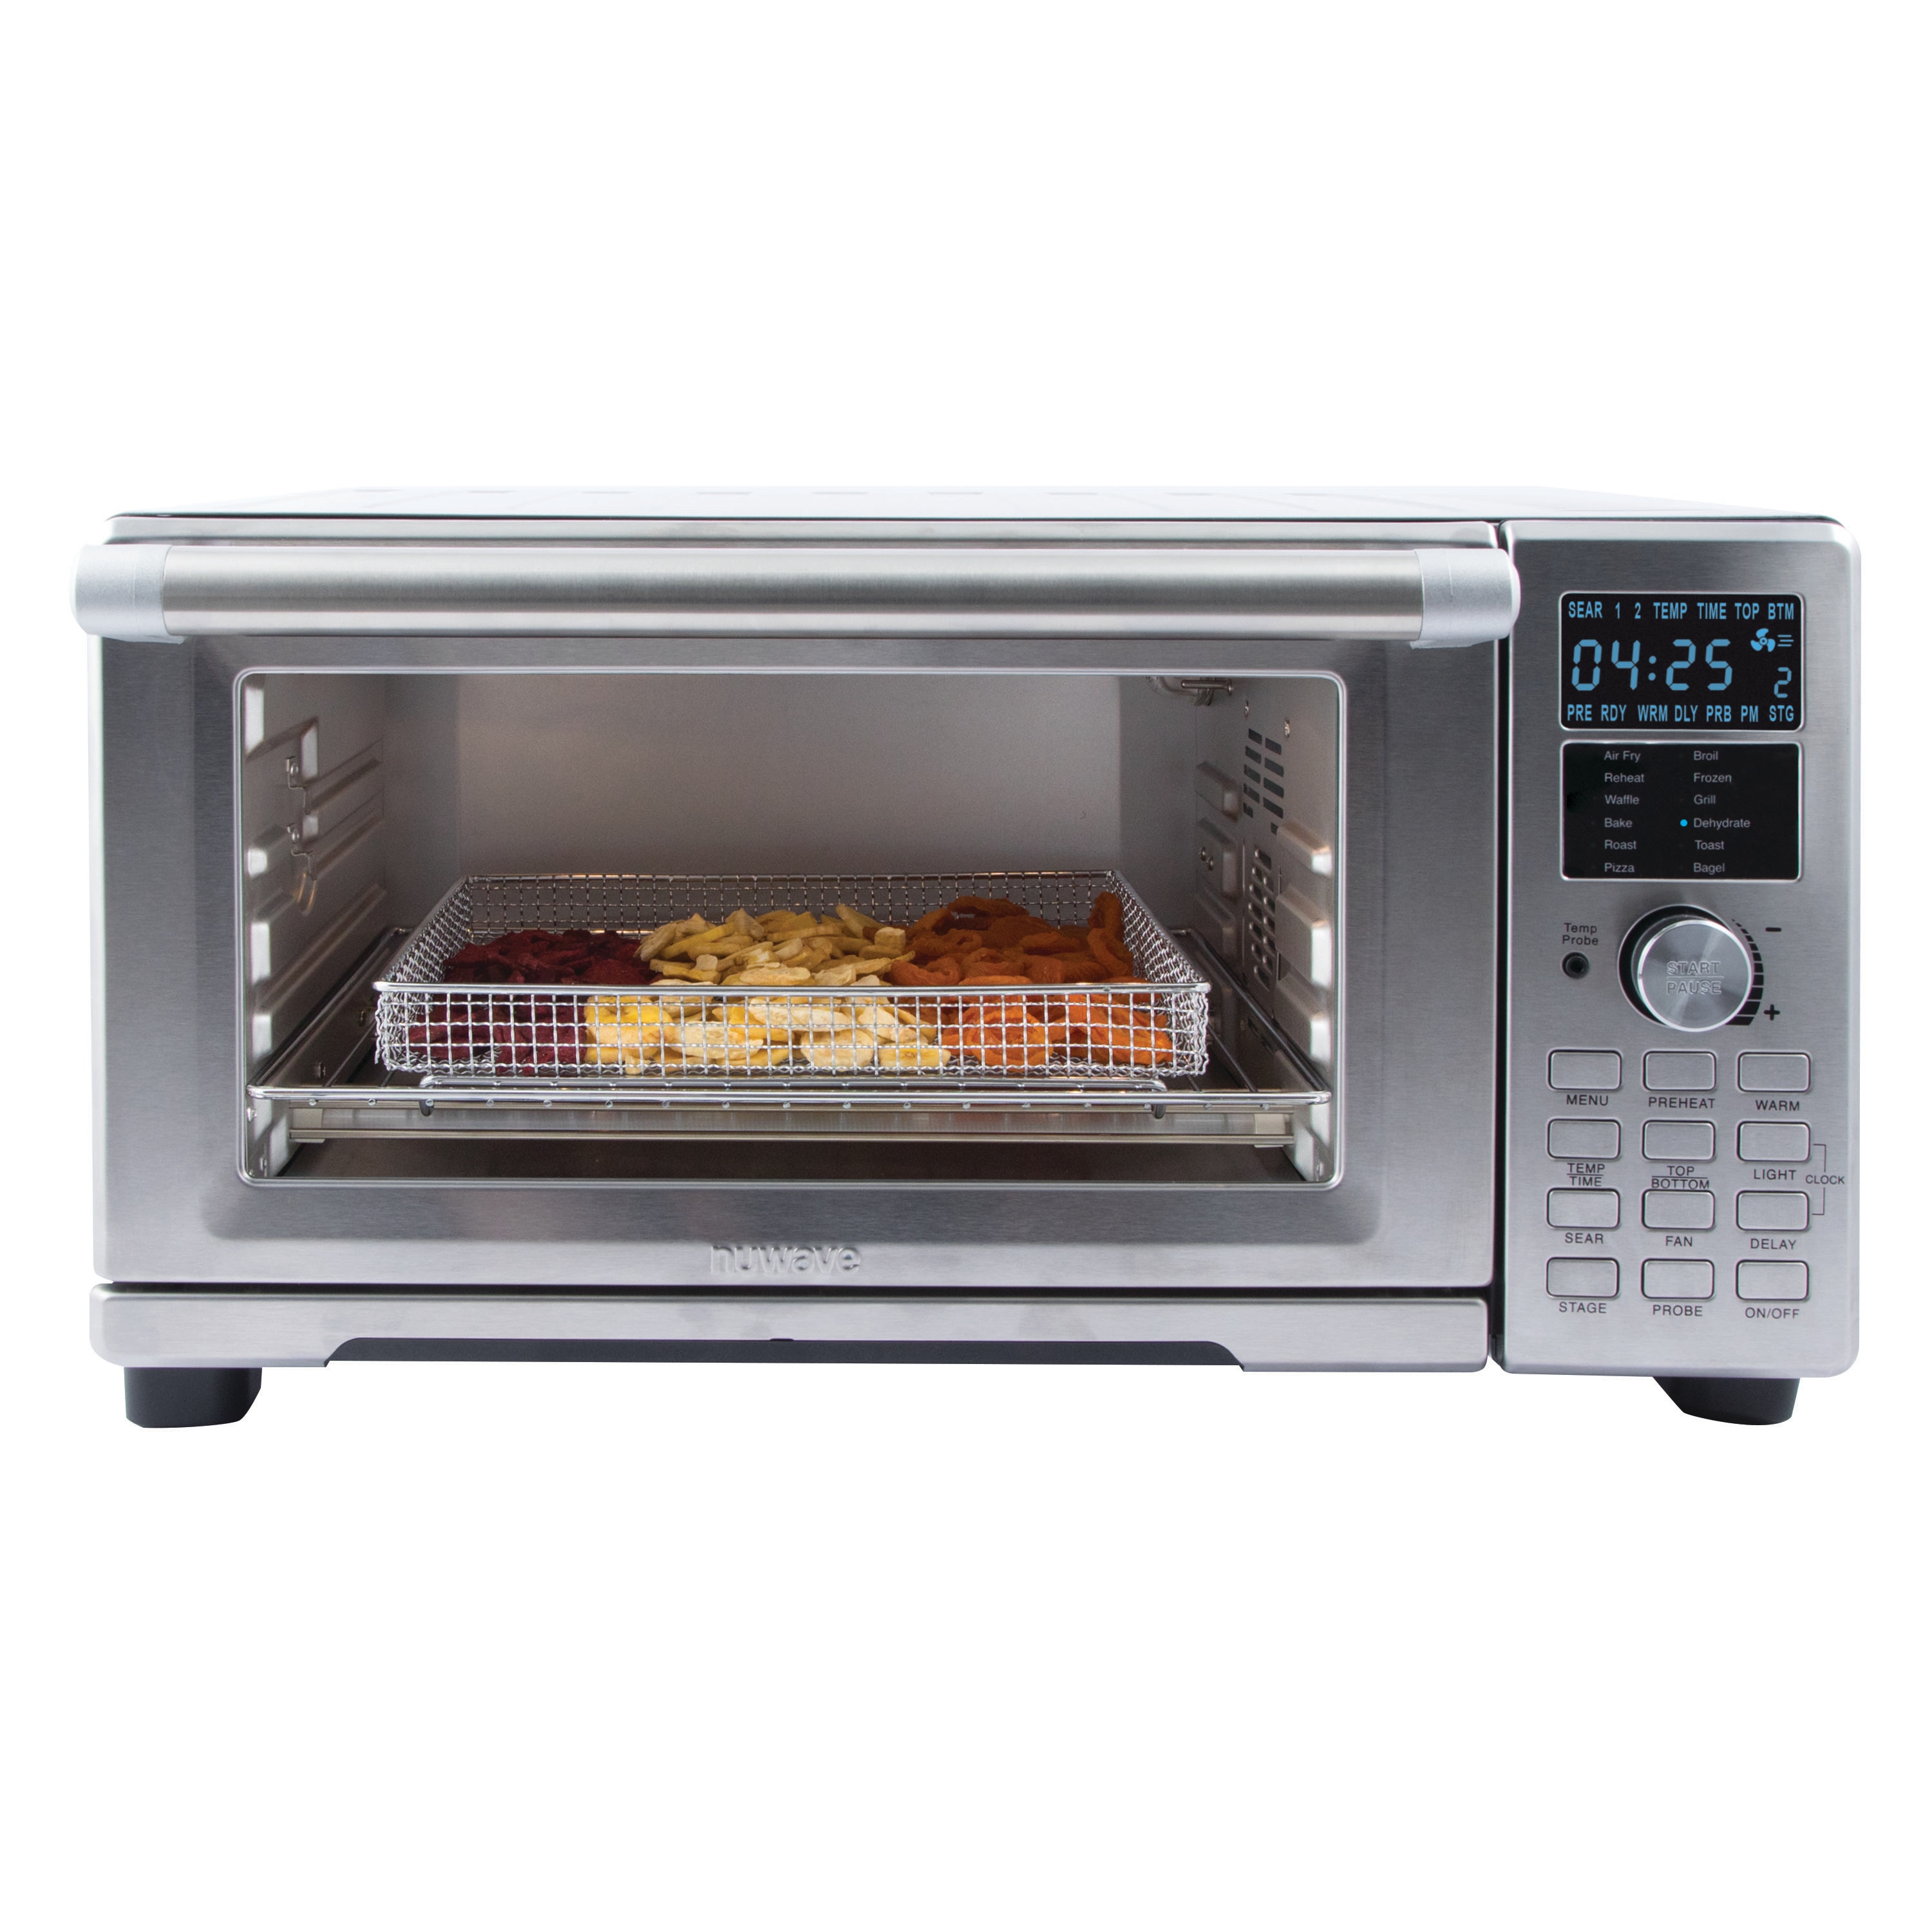 NuWave Bravo XL 1800-Watt Convection Oven, Smart Toaster Oven 